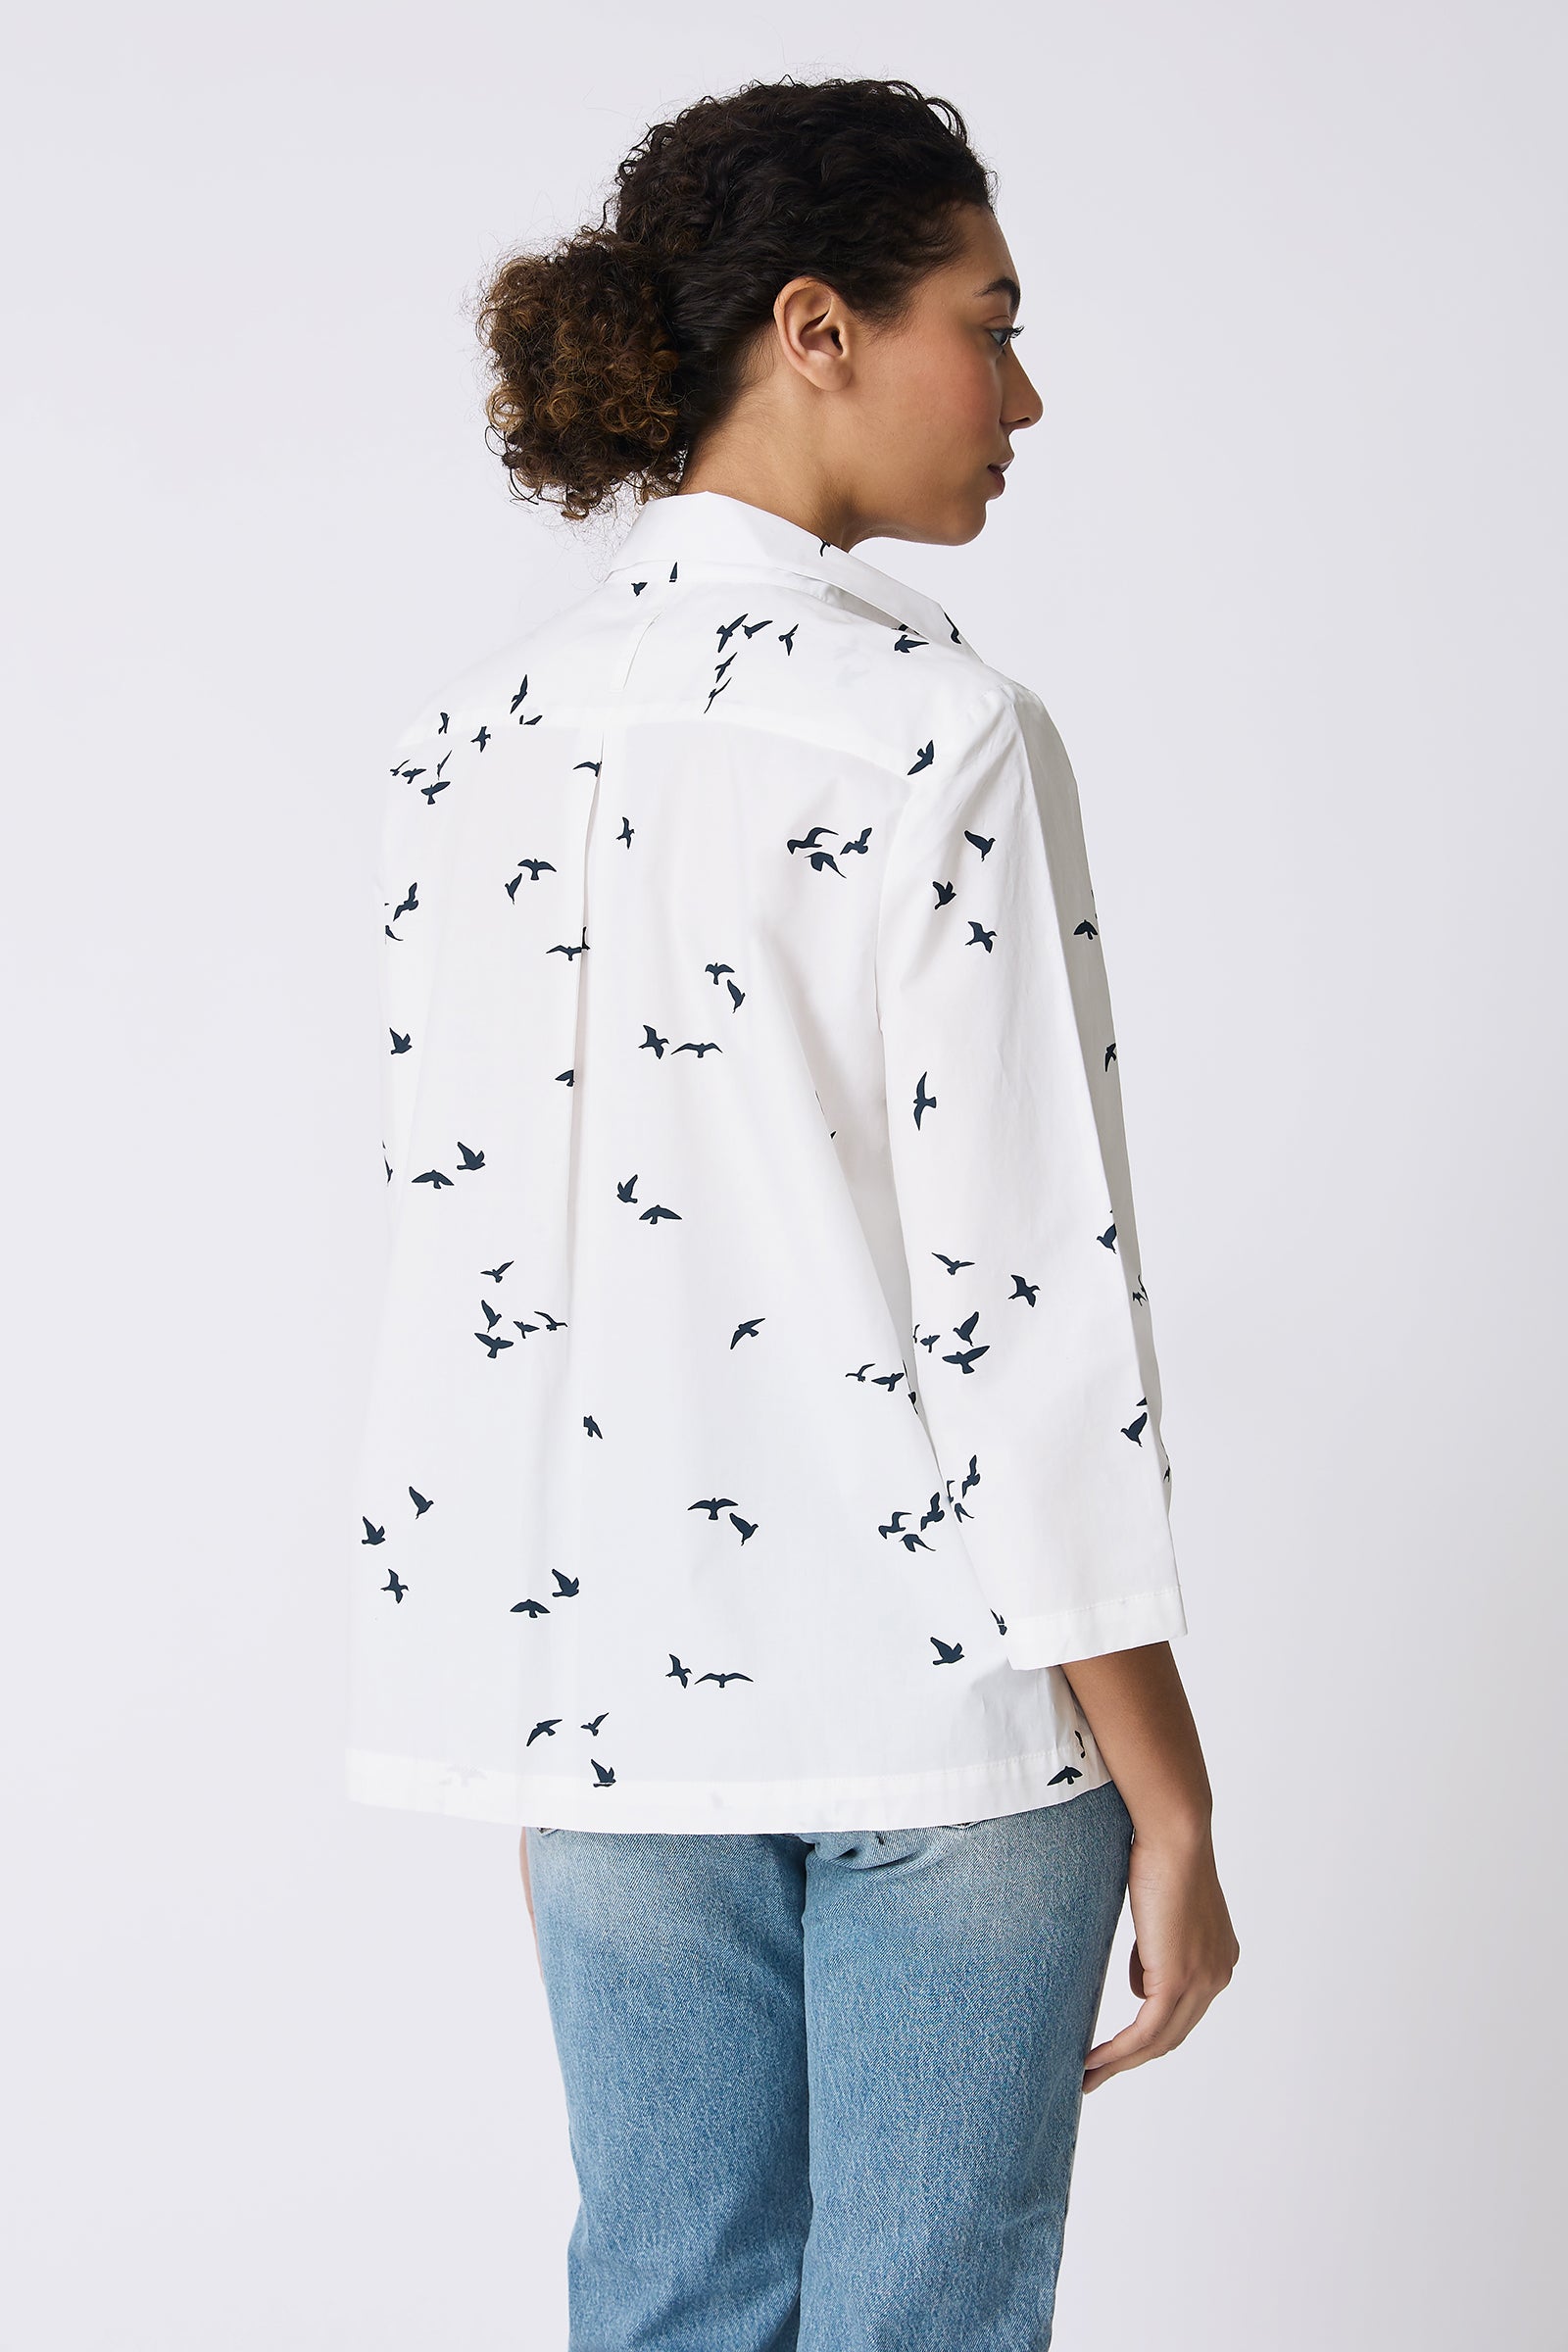 Kal Rieman 3/4 Sleeve Ginna Shirt in White Bird Print on model back view